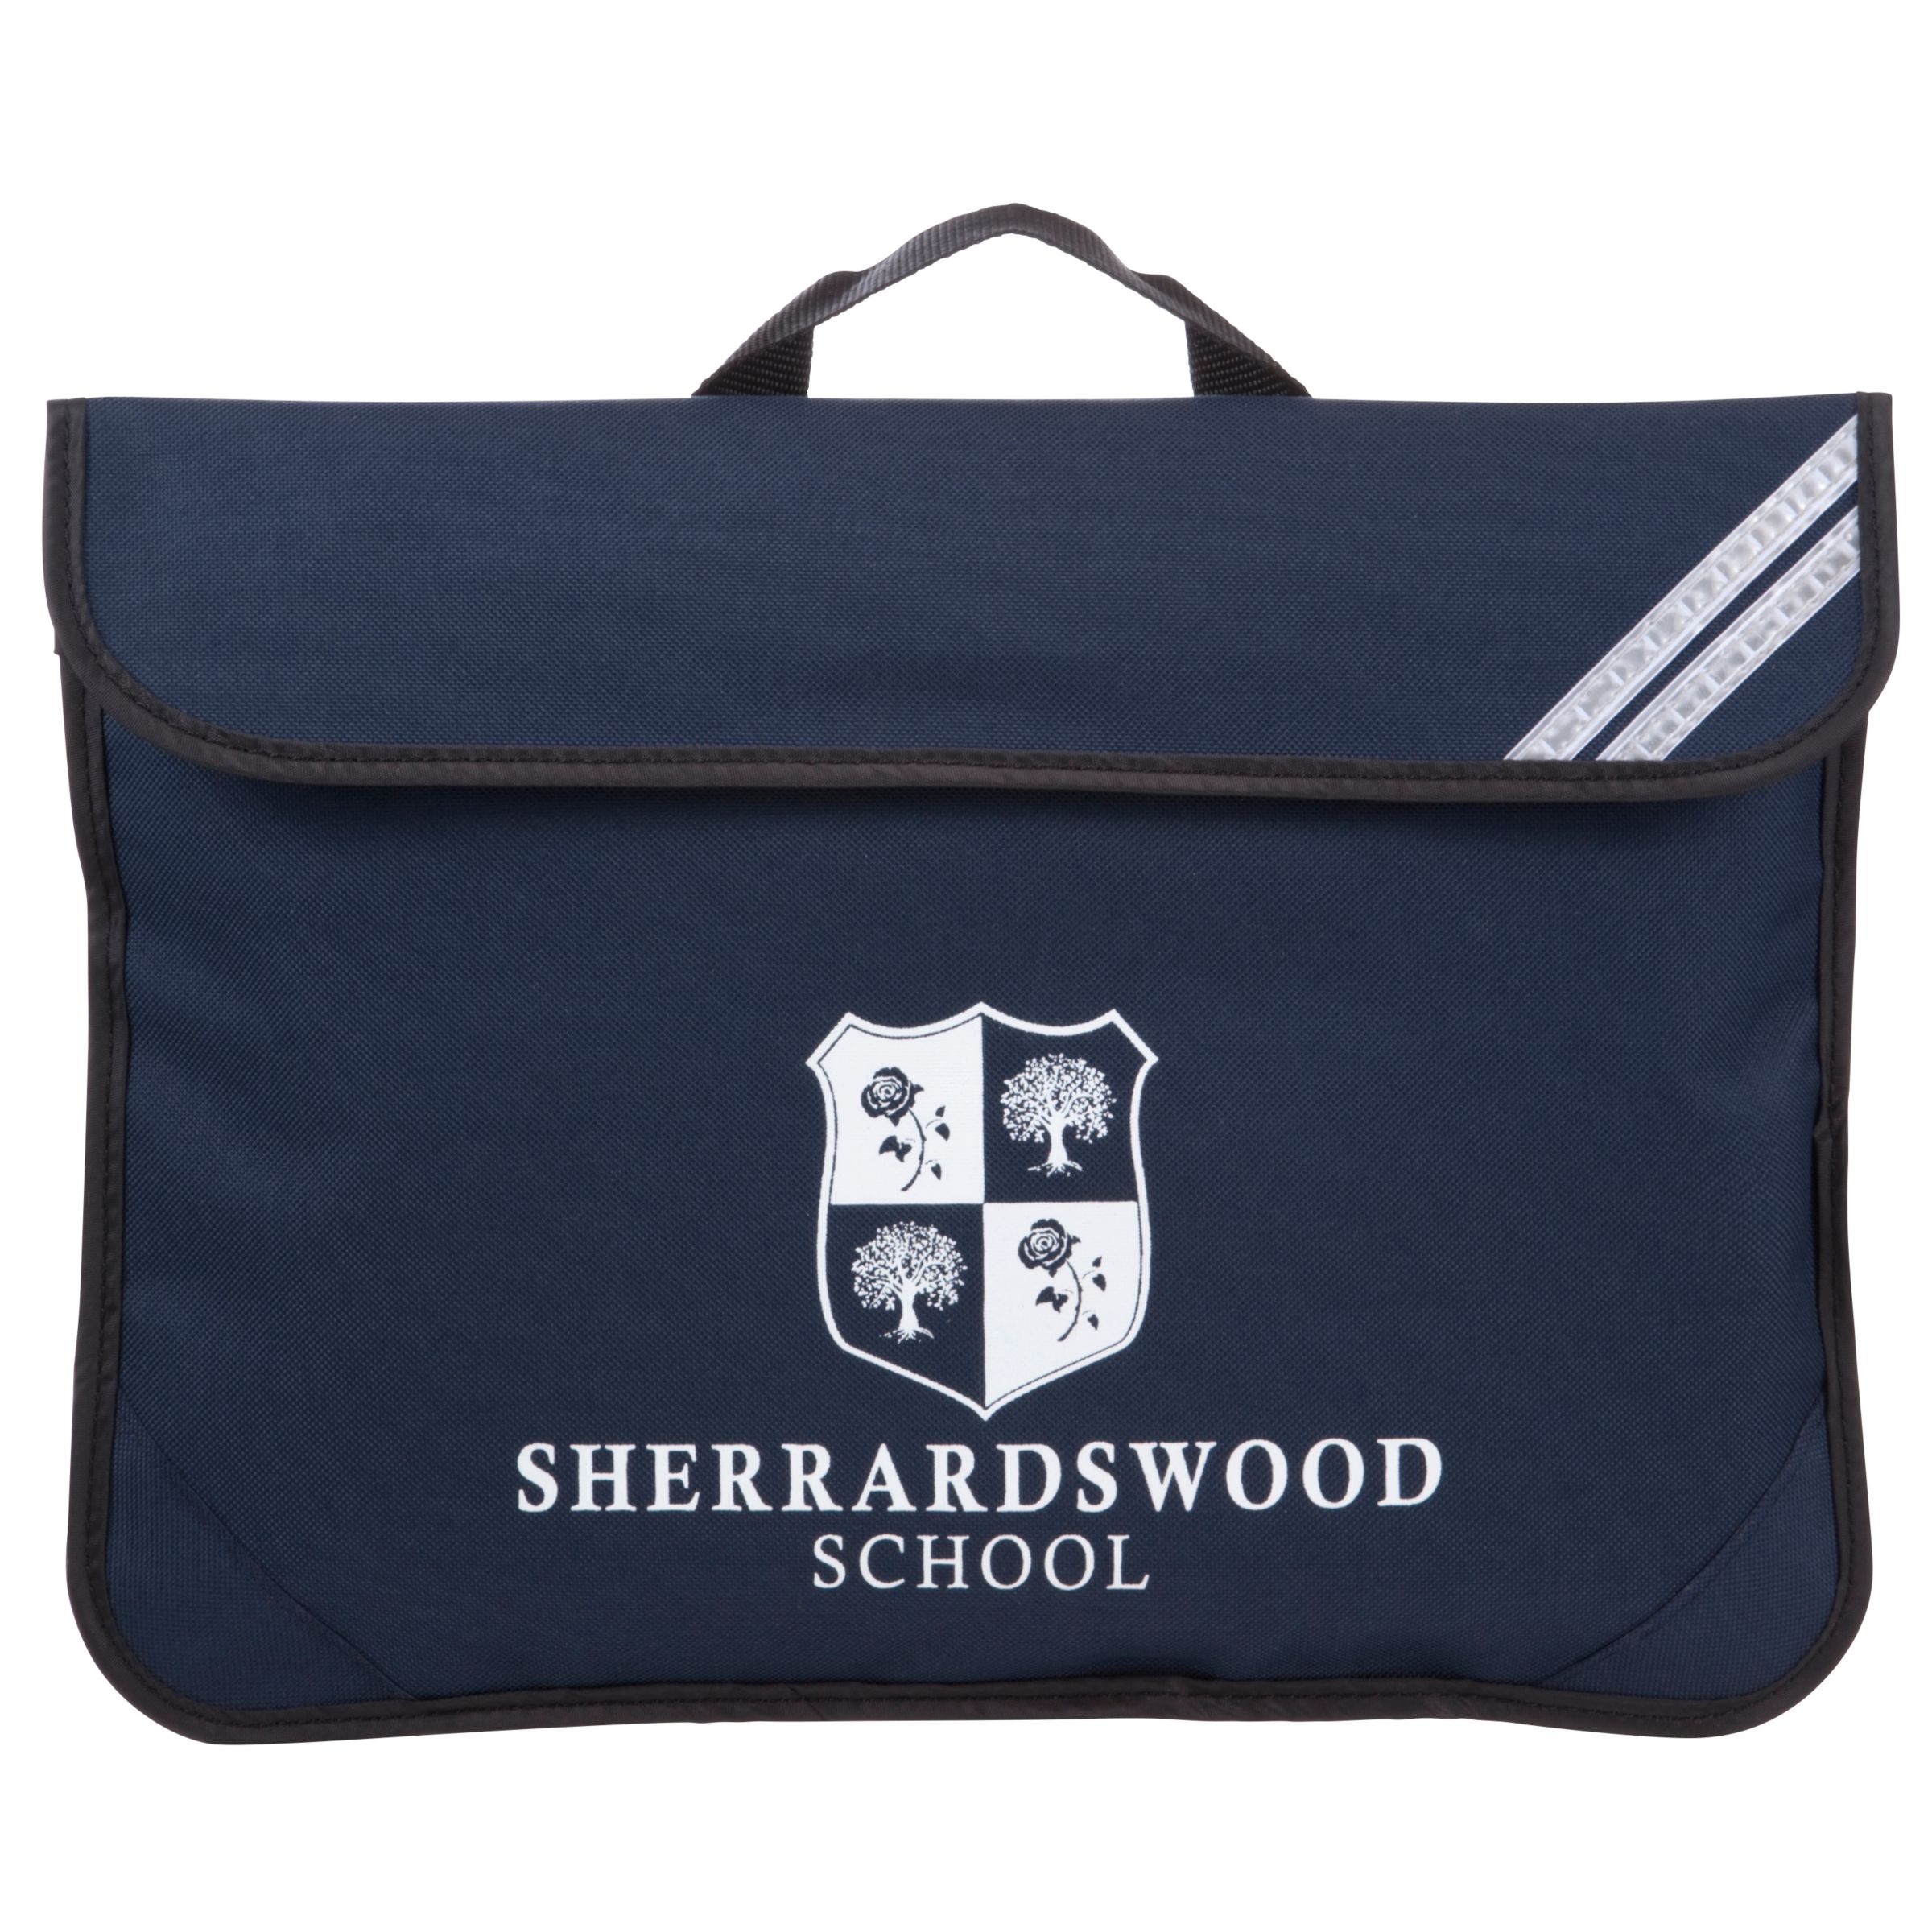 Sherrardswood School Unisex Book Bag Review